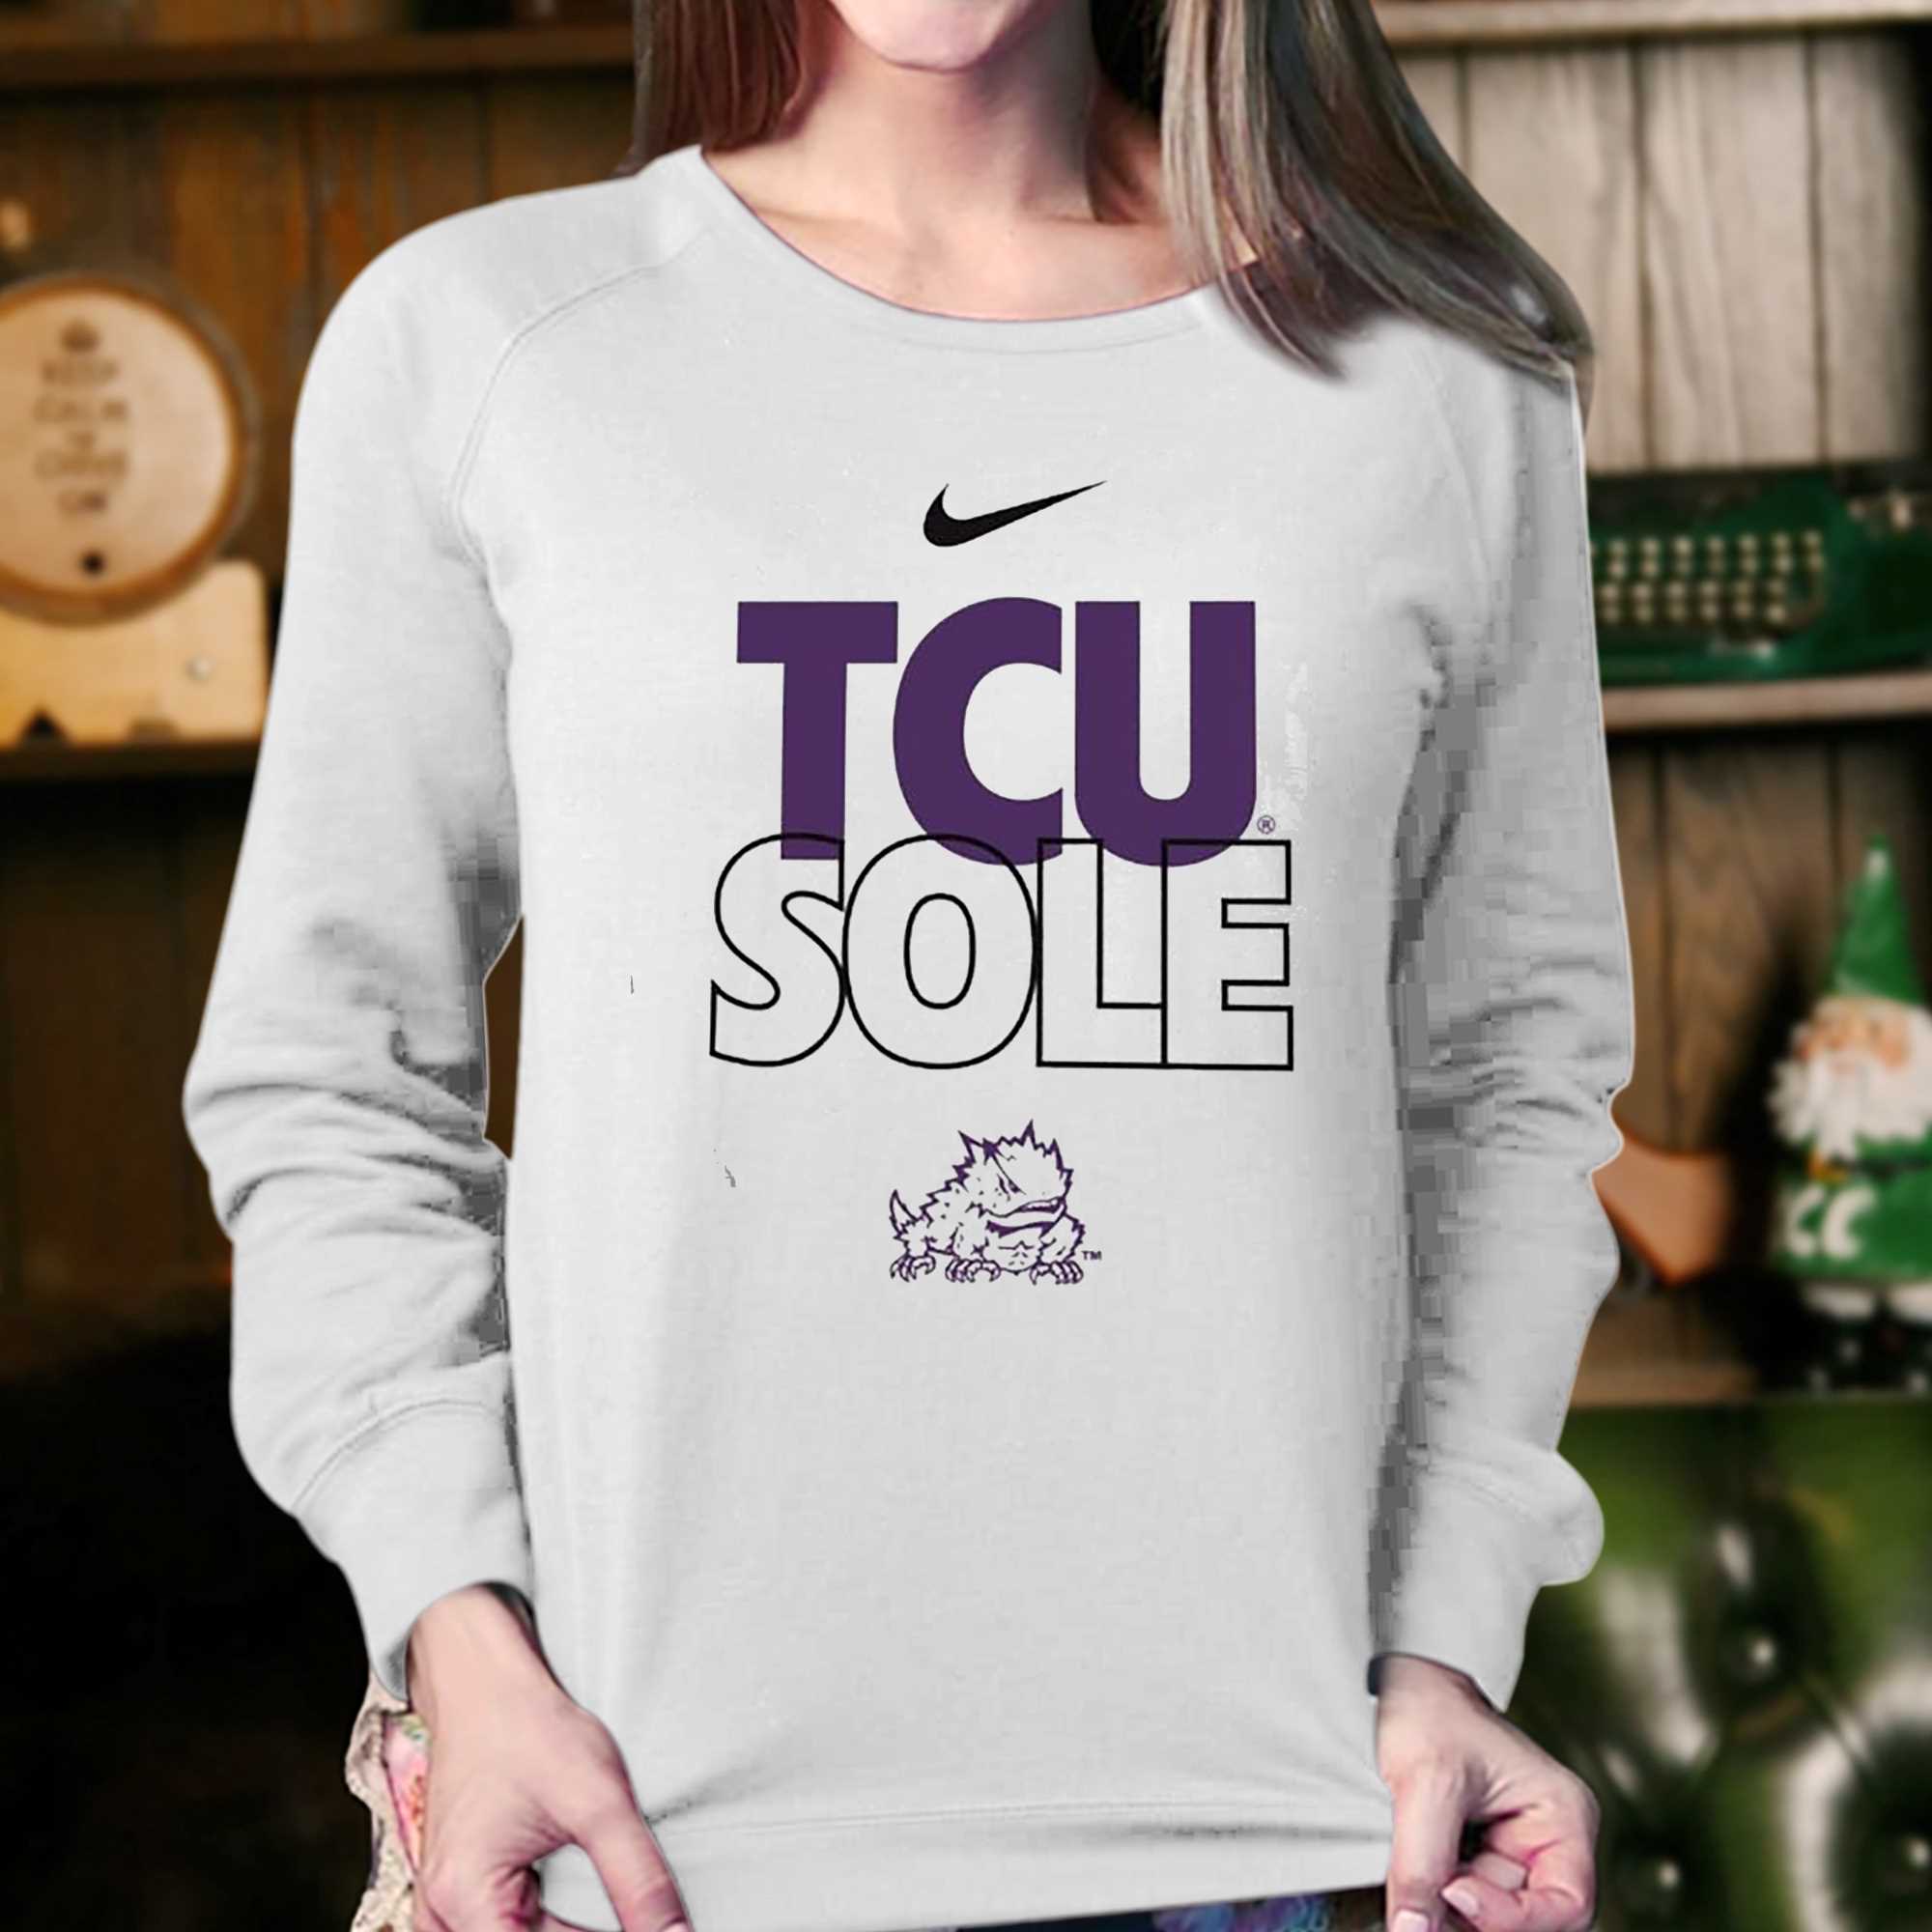 Texas Christian University Basketball Nike Tcu Sole Shirt 